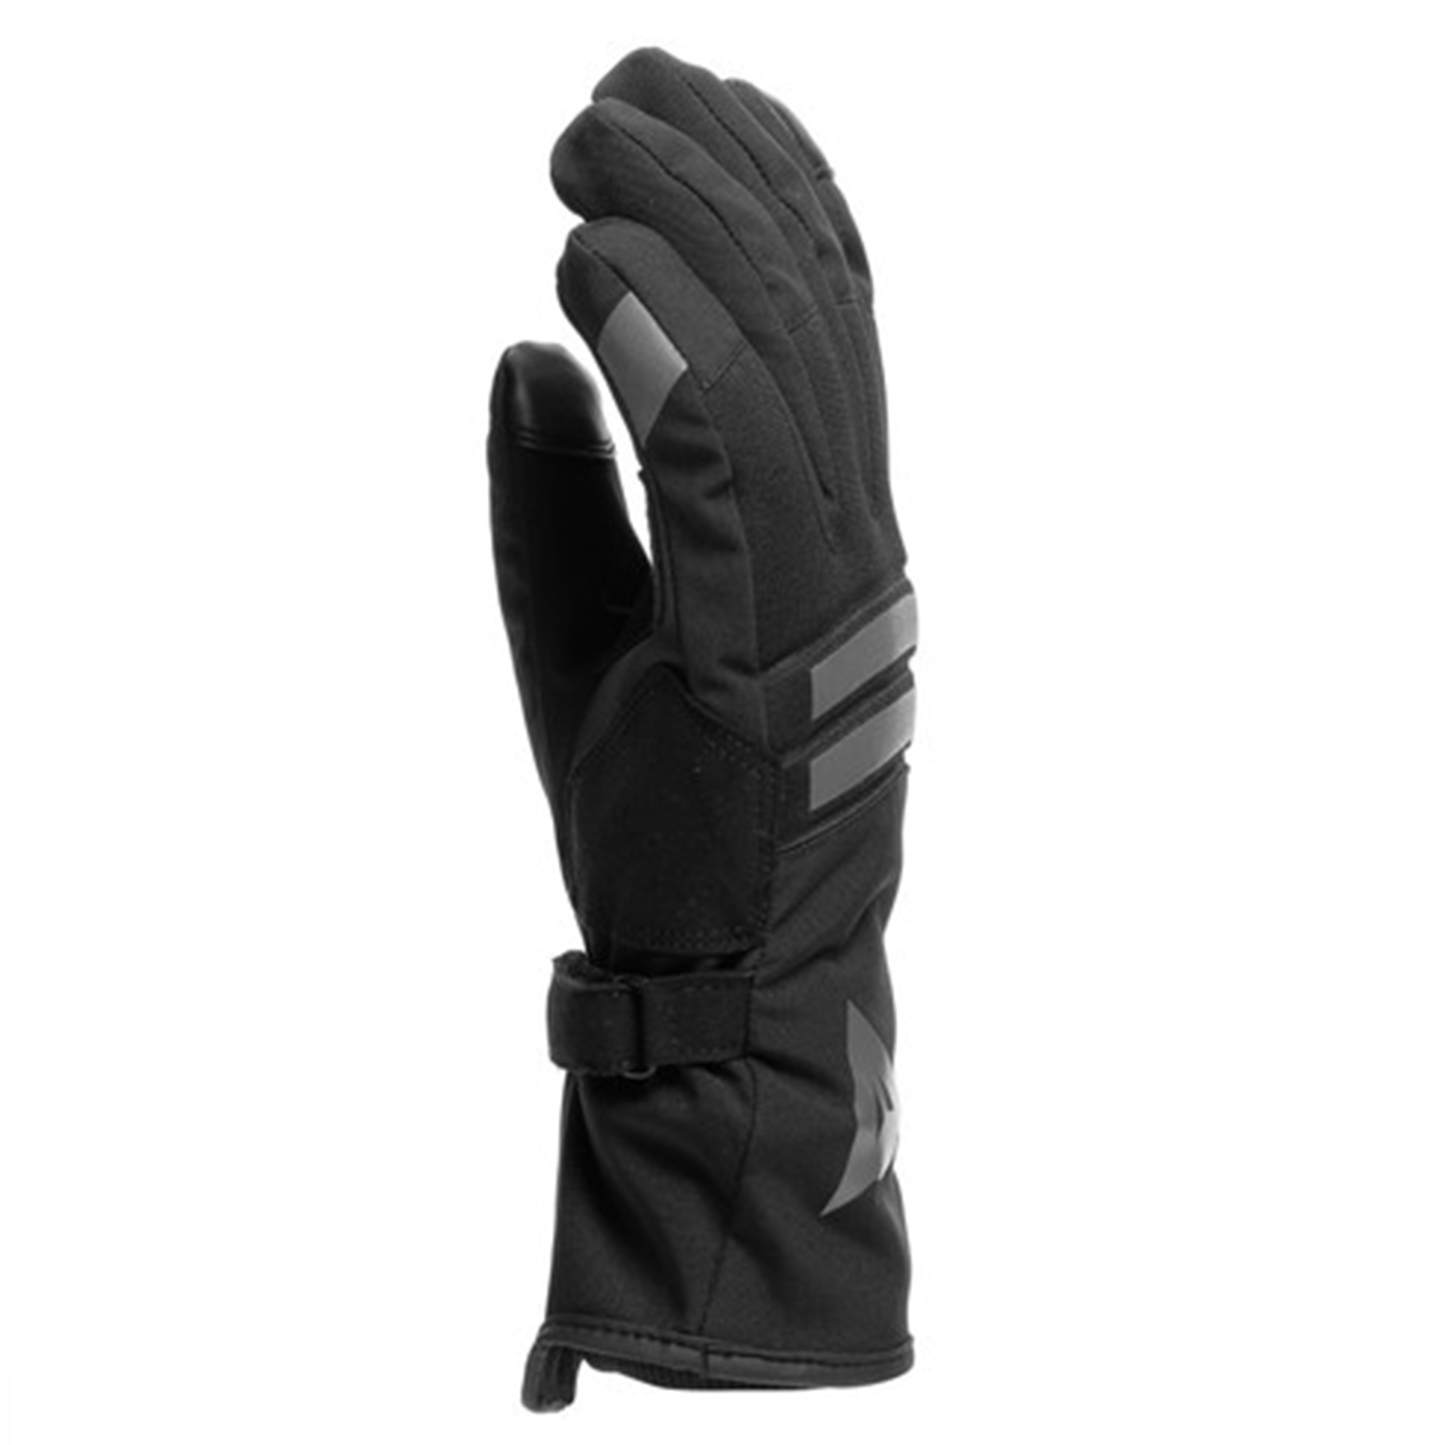 Dainese Plaza 3 D-Dry Ladies Gloves - Black/Anthracite (604)